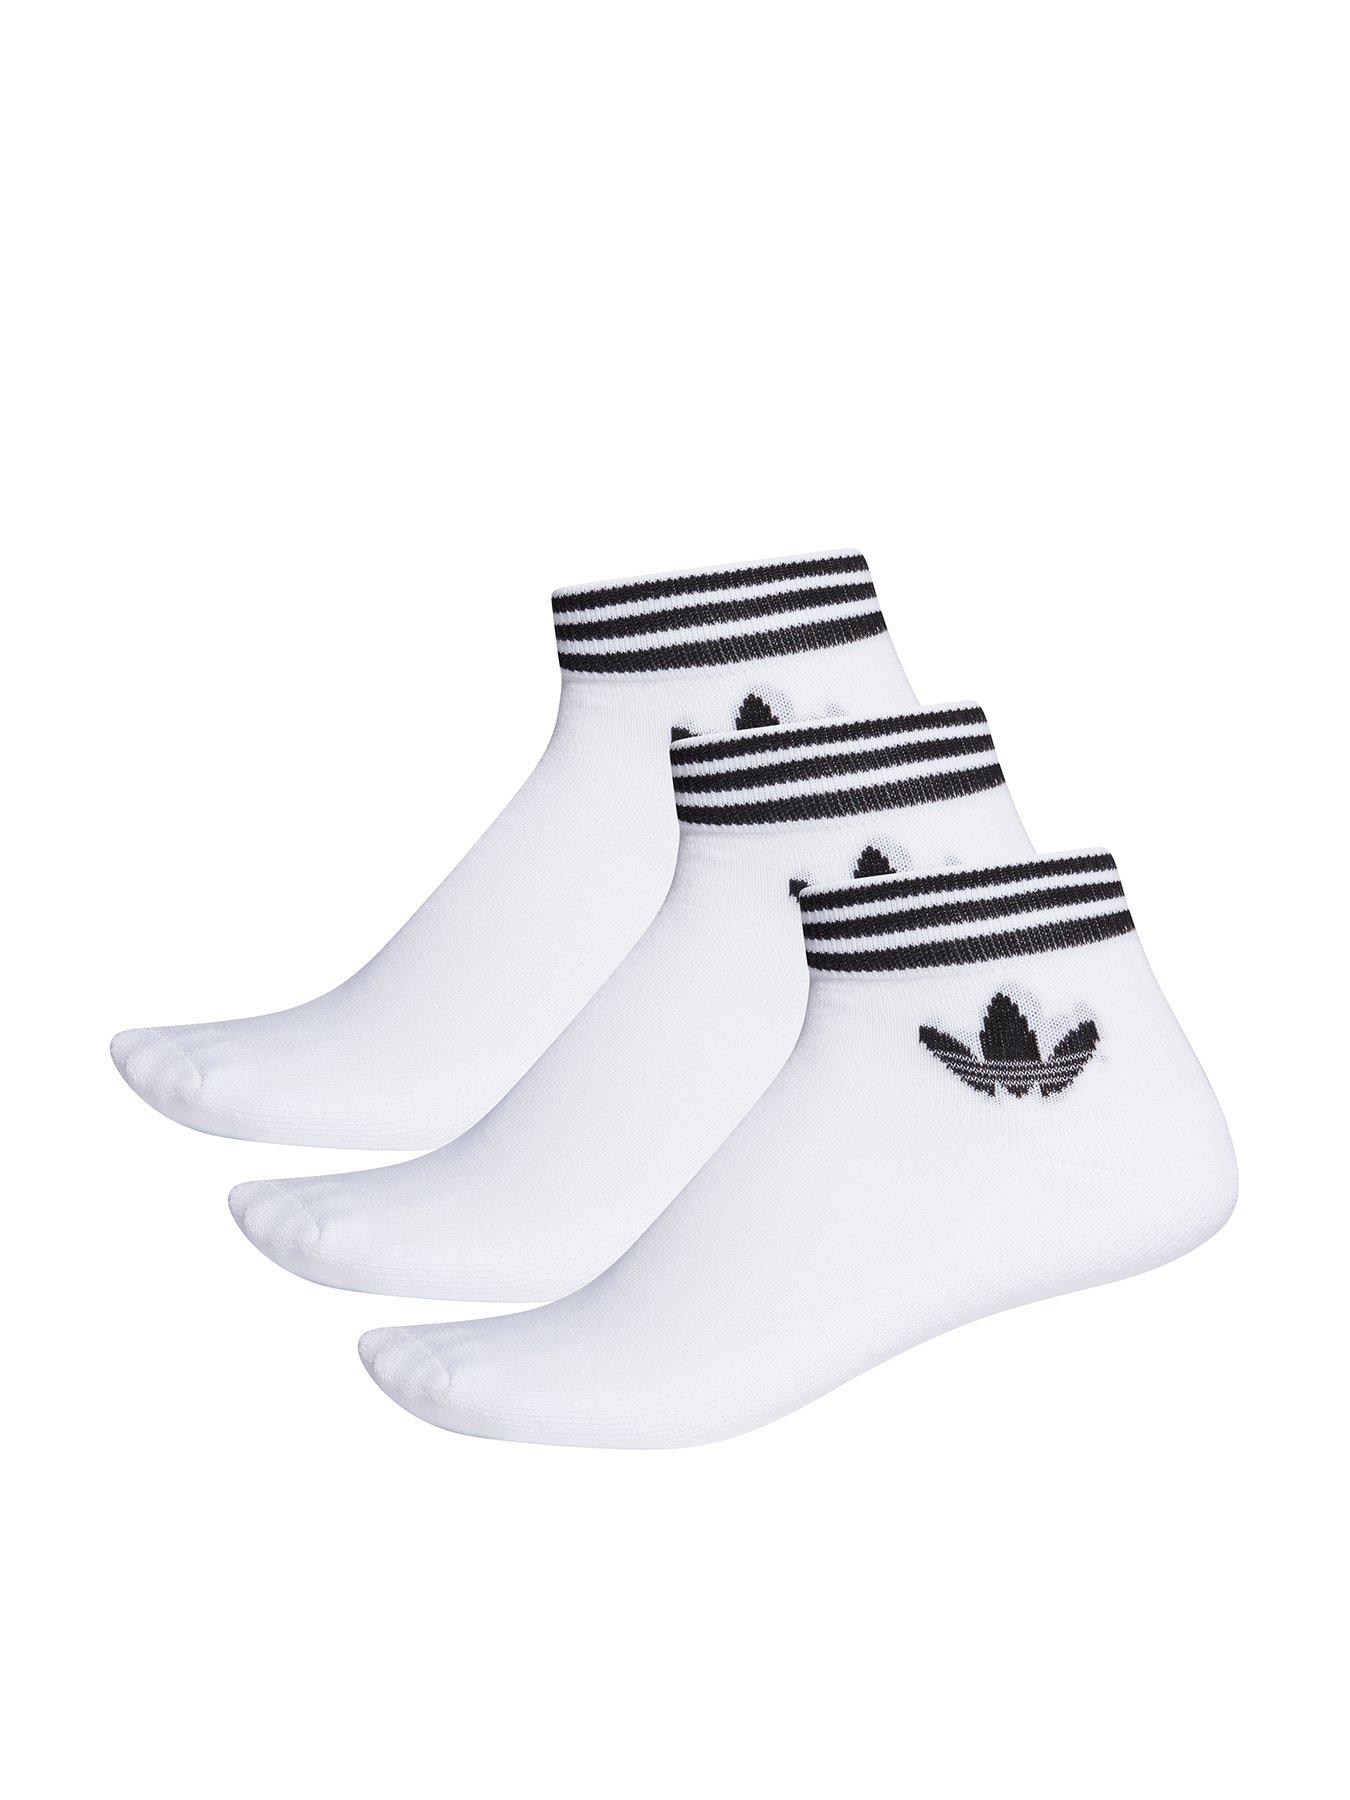 adidas Originals Kids Adicolor Ankle 3 Pack Socks - White/Black | very ...